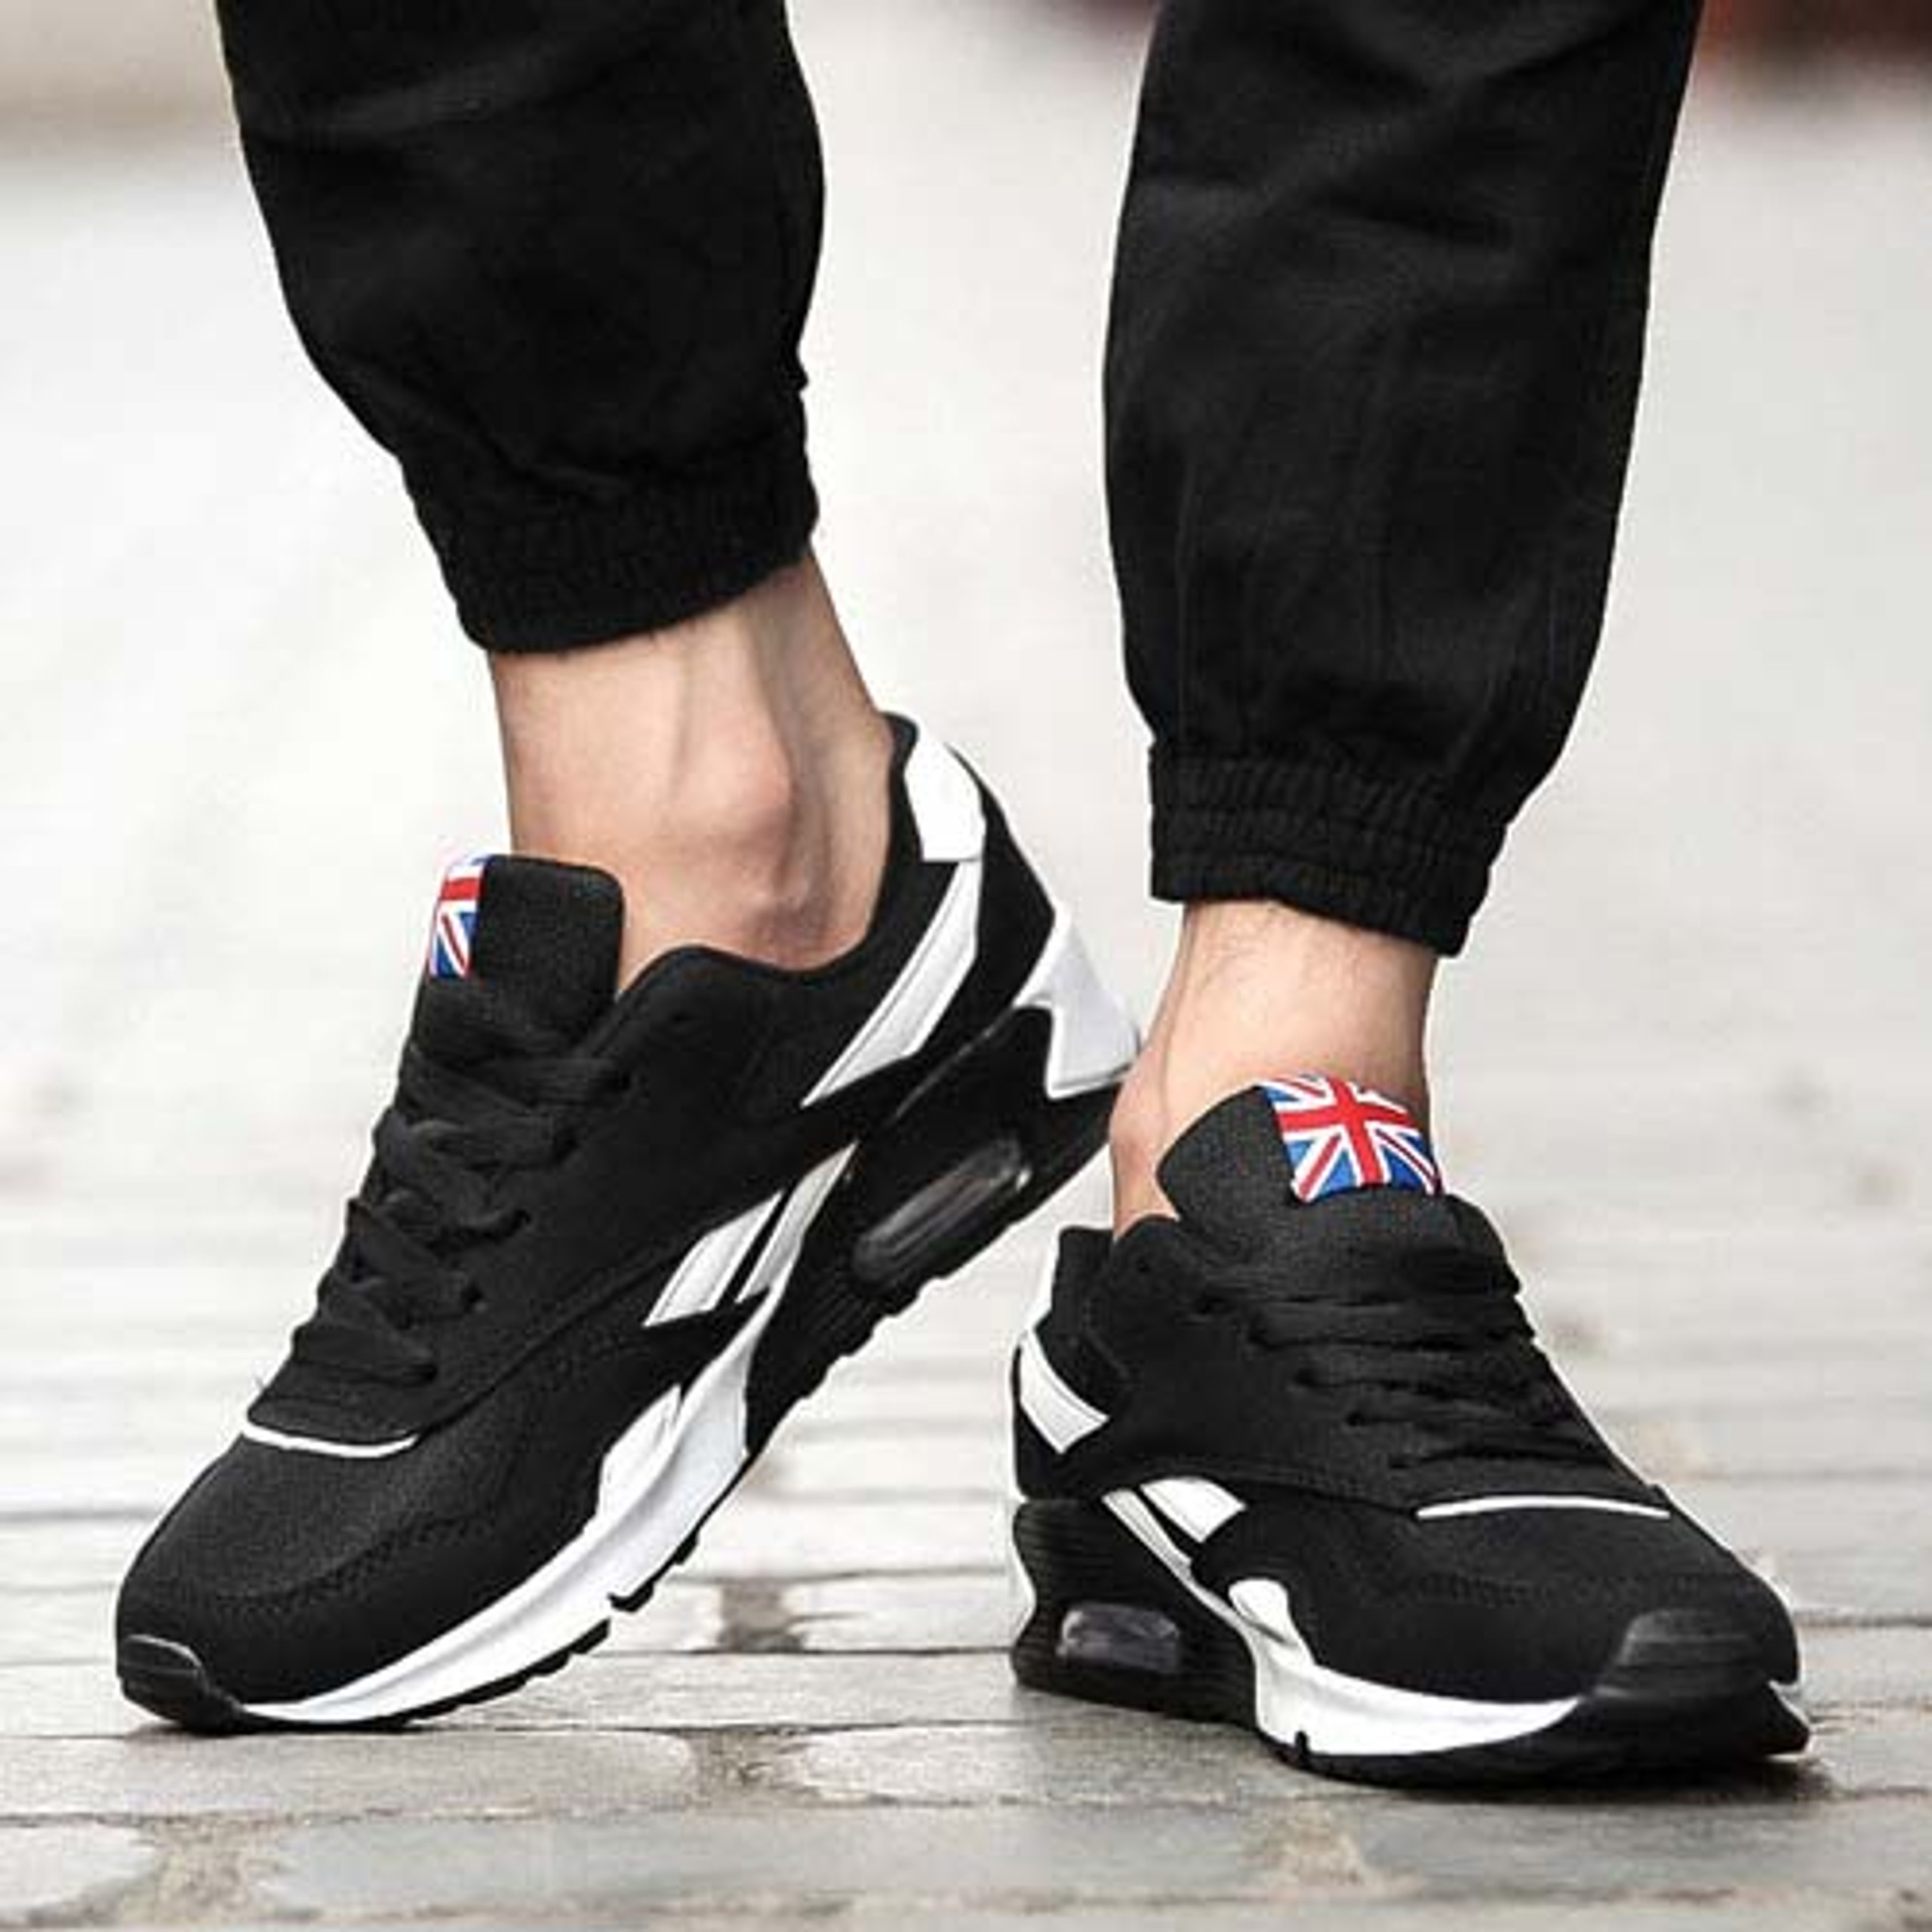 Black pattern flag print leather lace up shoe sneaker | Mens shoes ...